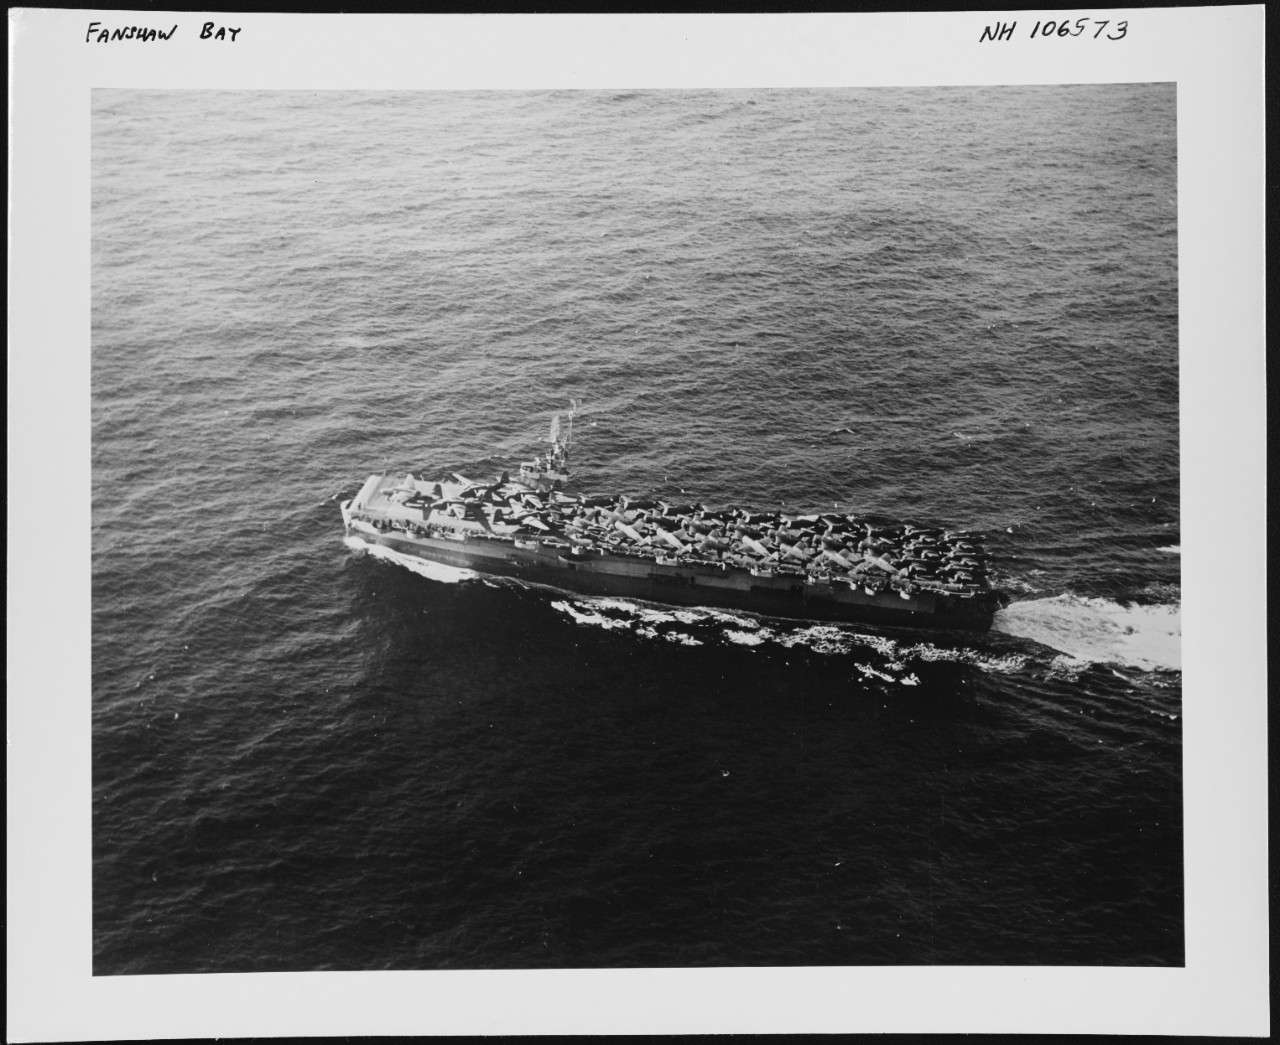 Photo # NH 106573  USS Fanshaw Bay